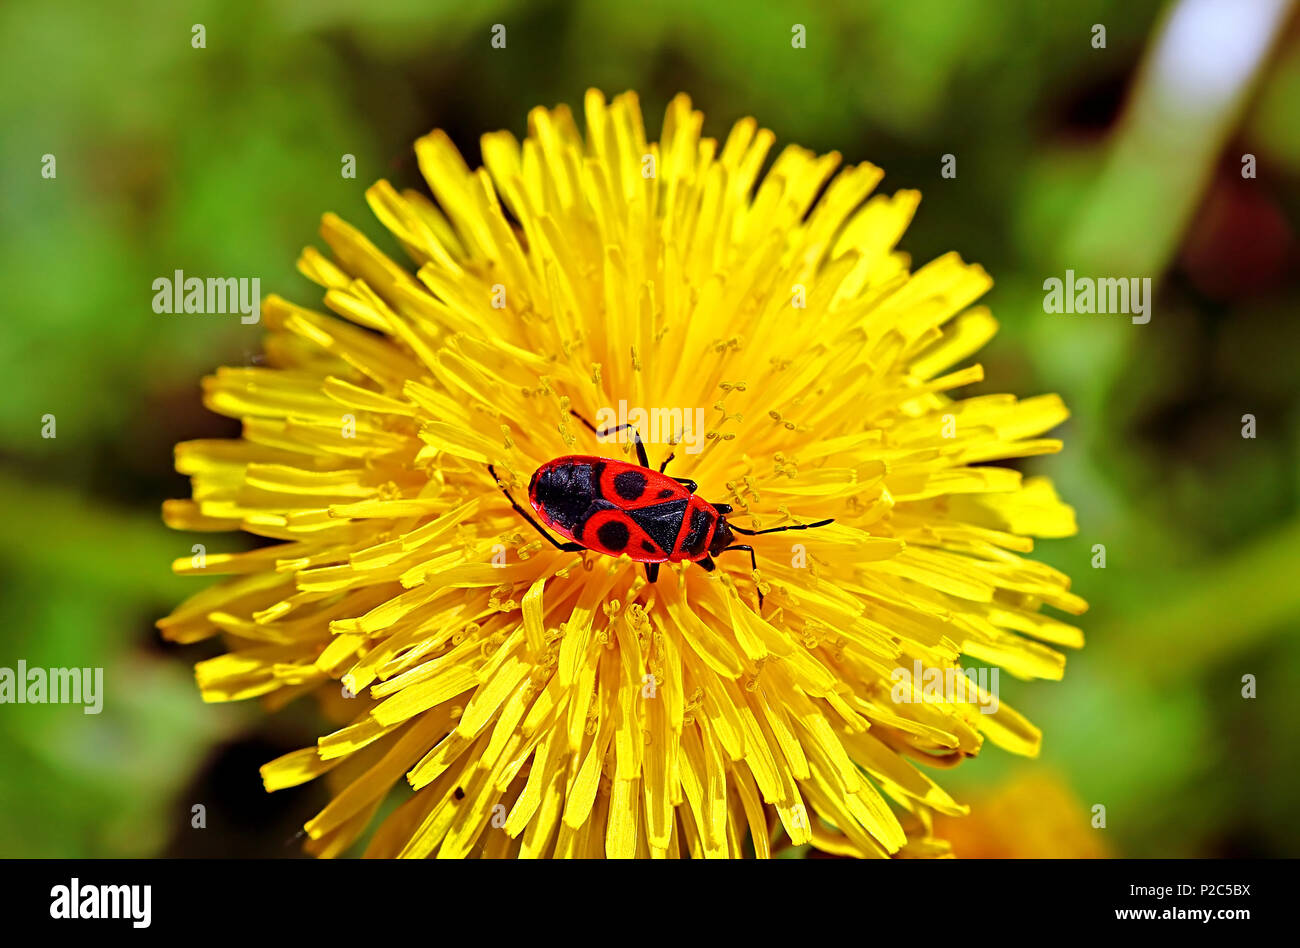 Firebug (Pyrrhocoris apterus) insect on the dandelion in the springtime Stock Photo